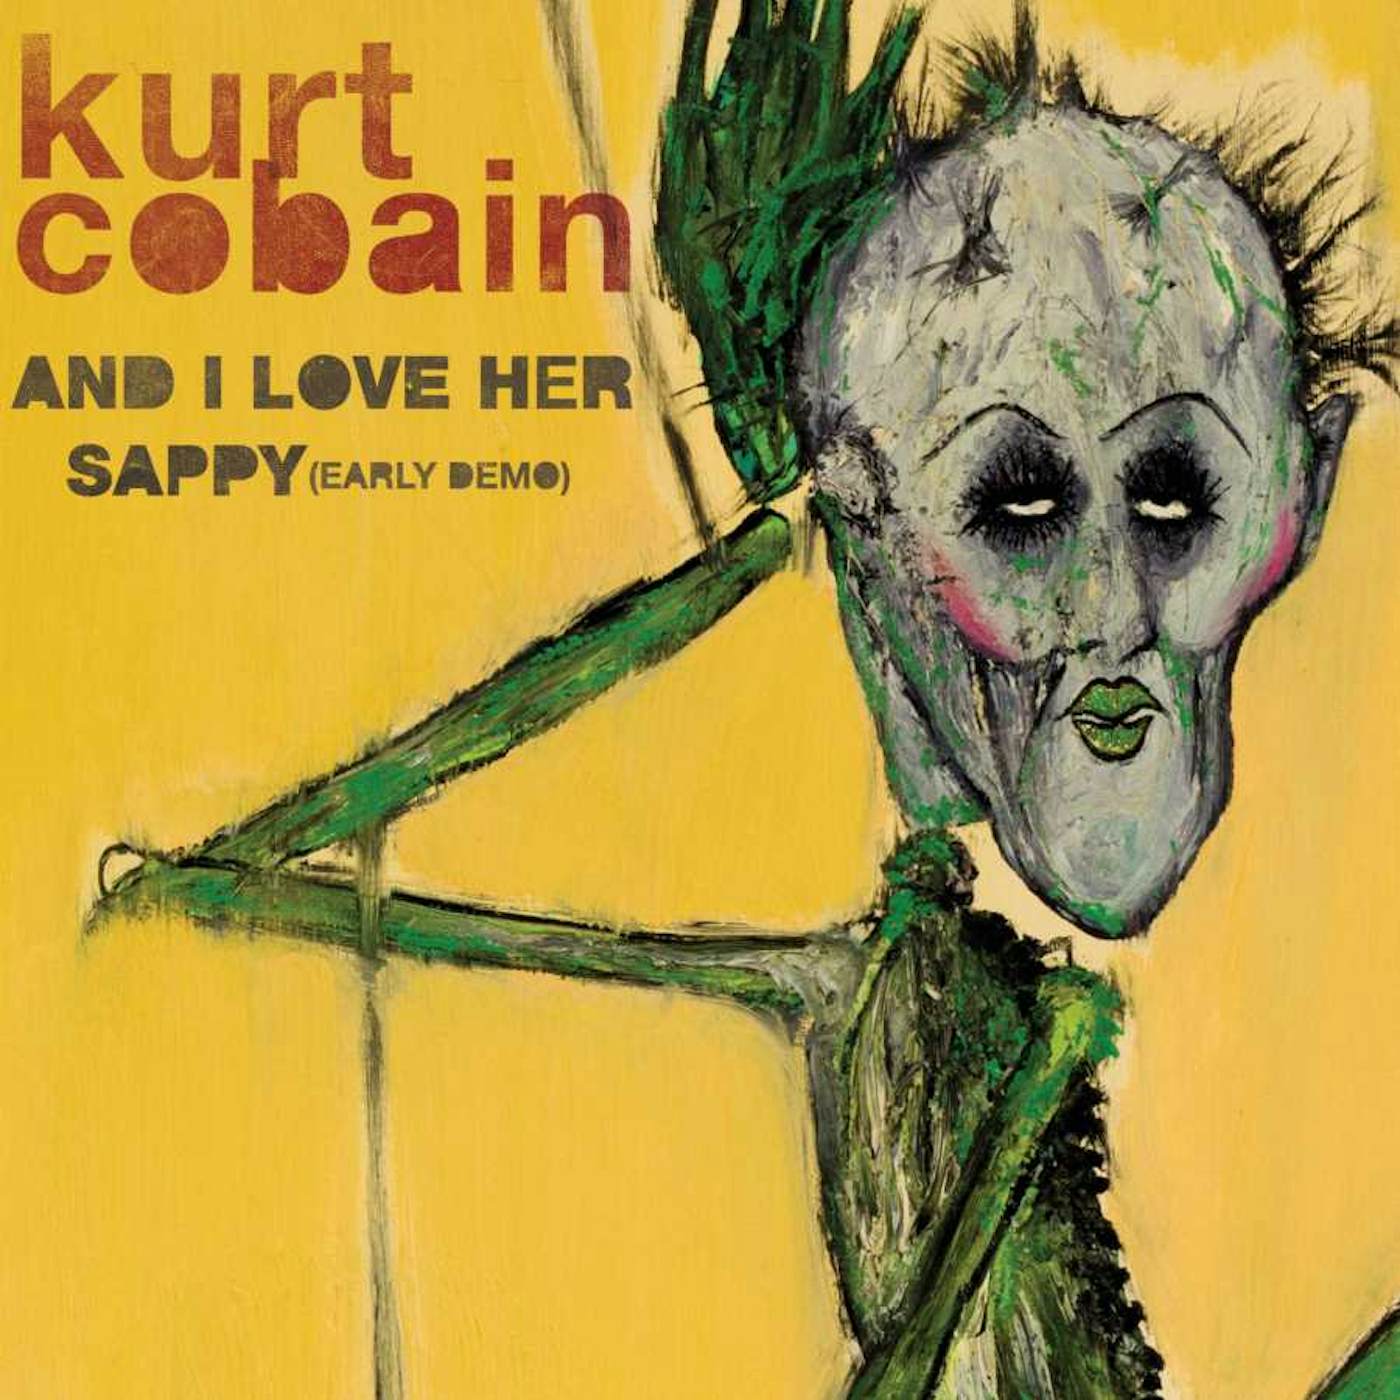 Kurt Cobain And I Love Her/Sappy (Early Demo) Vinyl Record